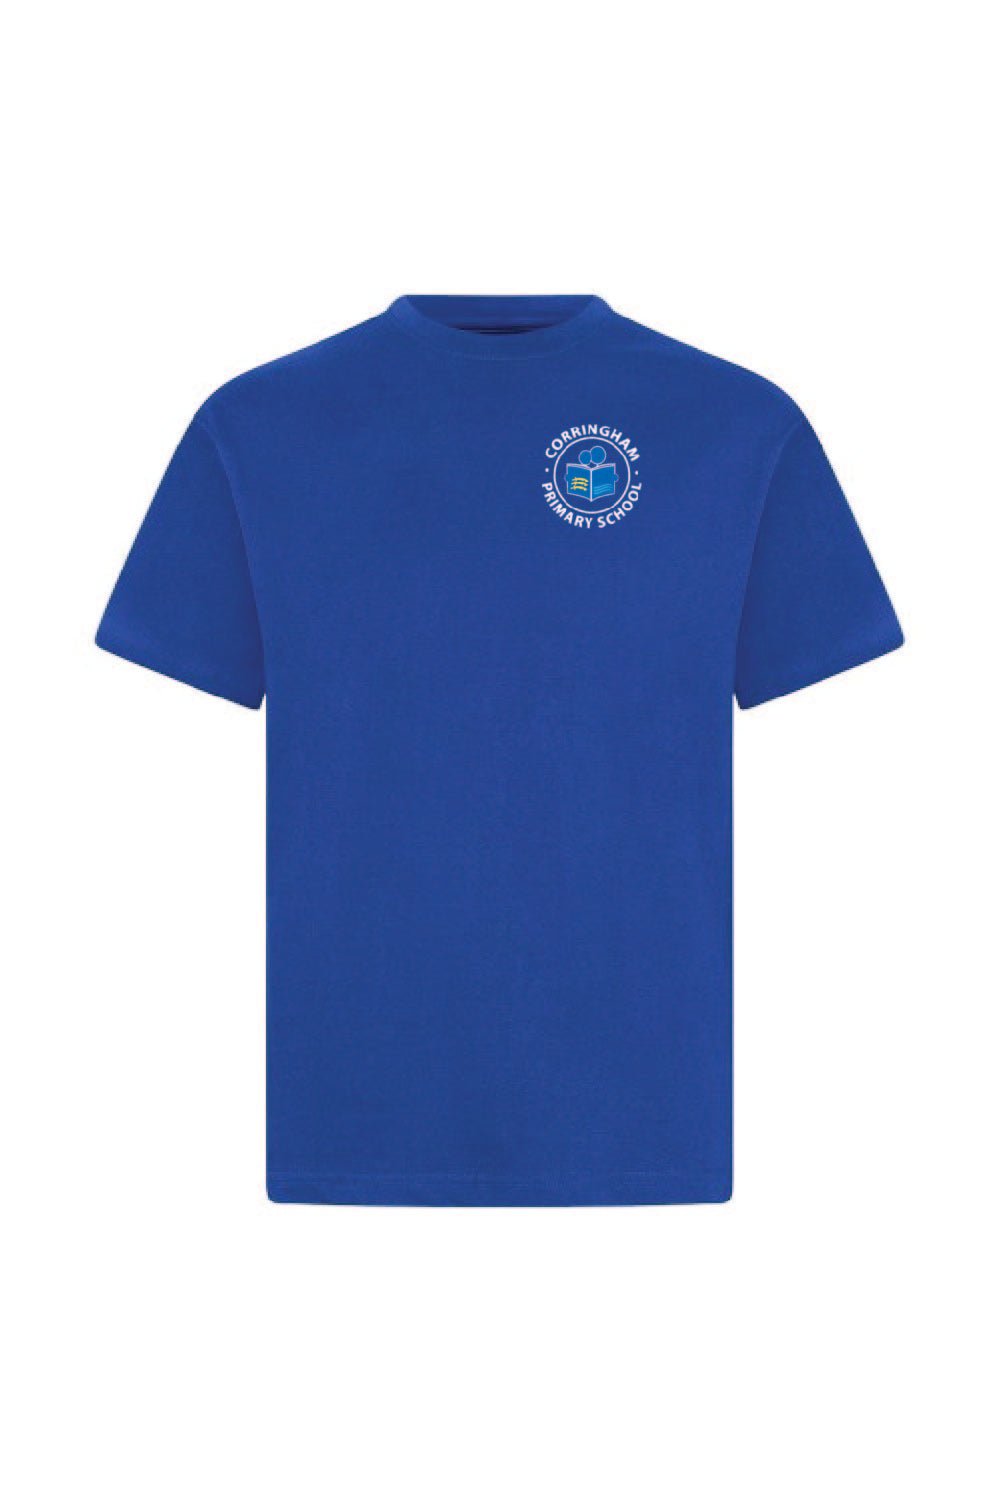 Corringham Primary Blue PE Top - Uniformwise Schoolwear